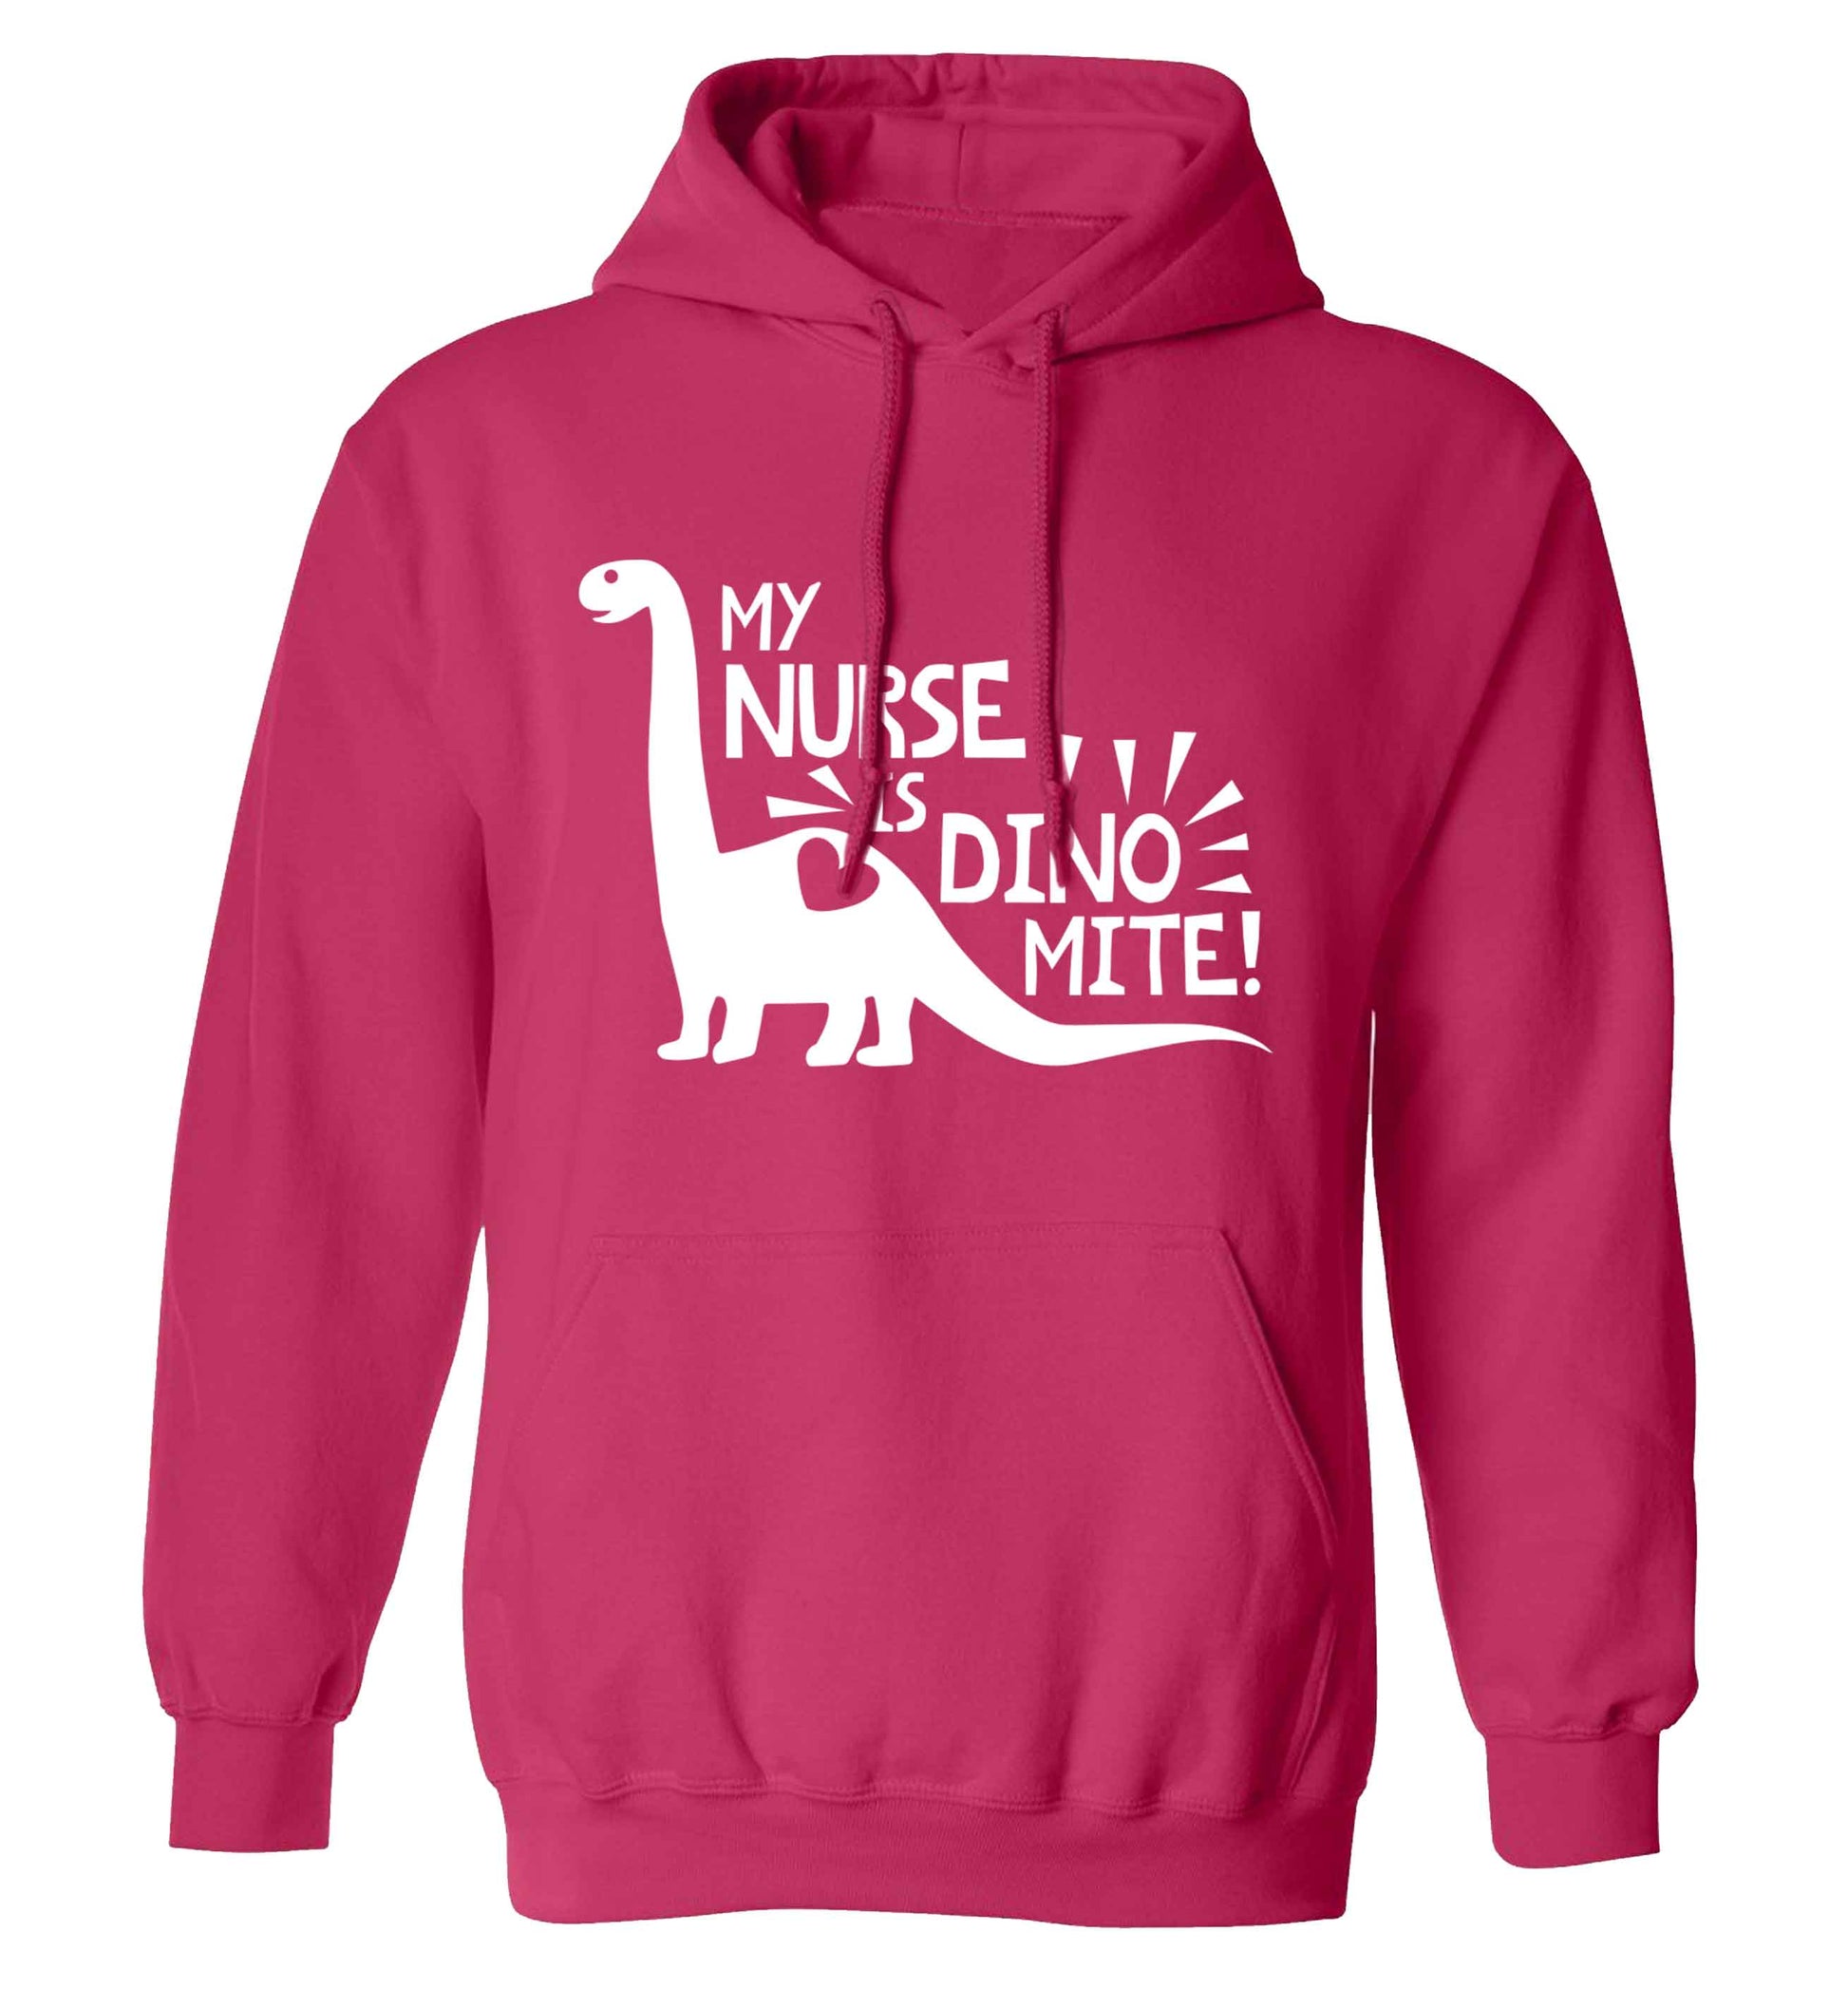 My nurse is dinomite! adults unisex pink hoodie 2XL